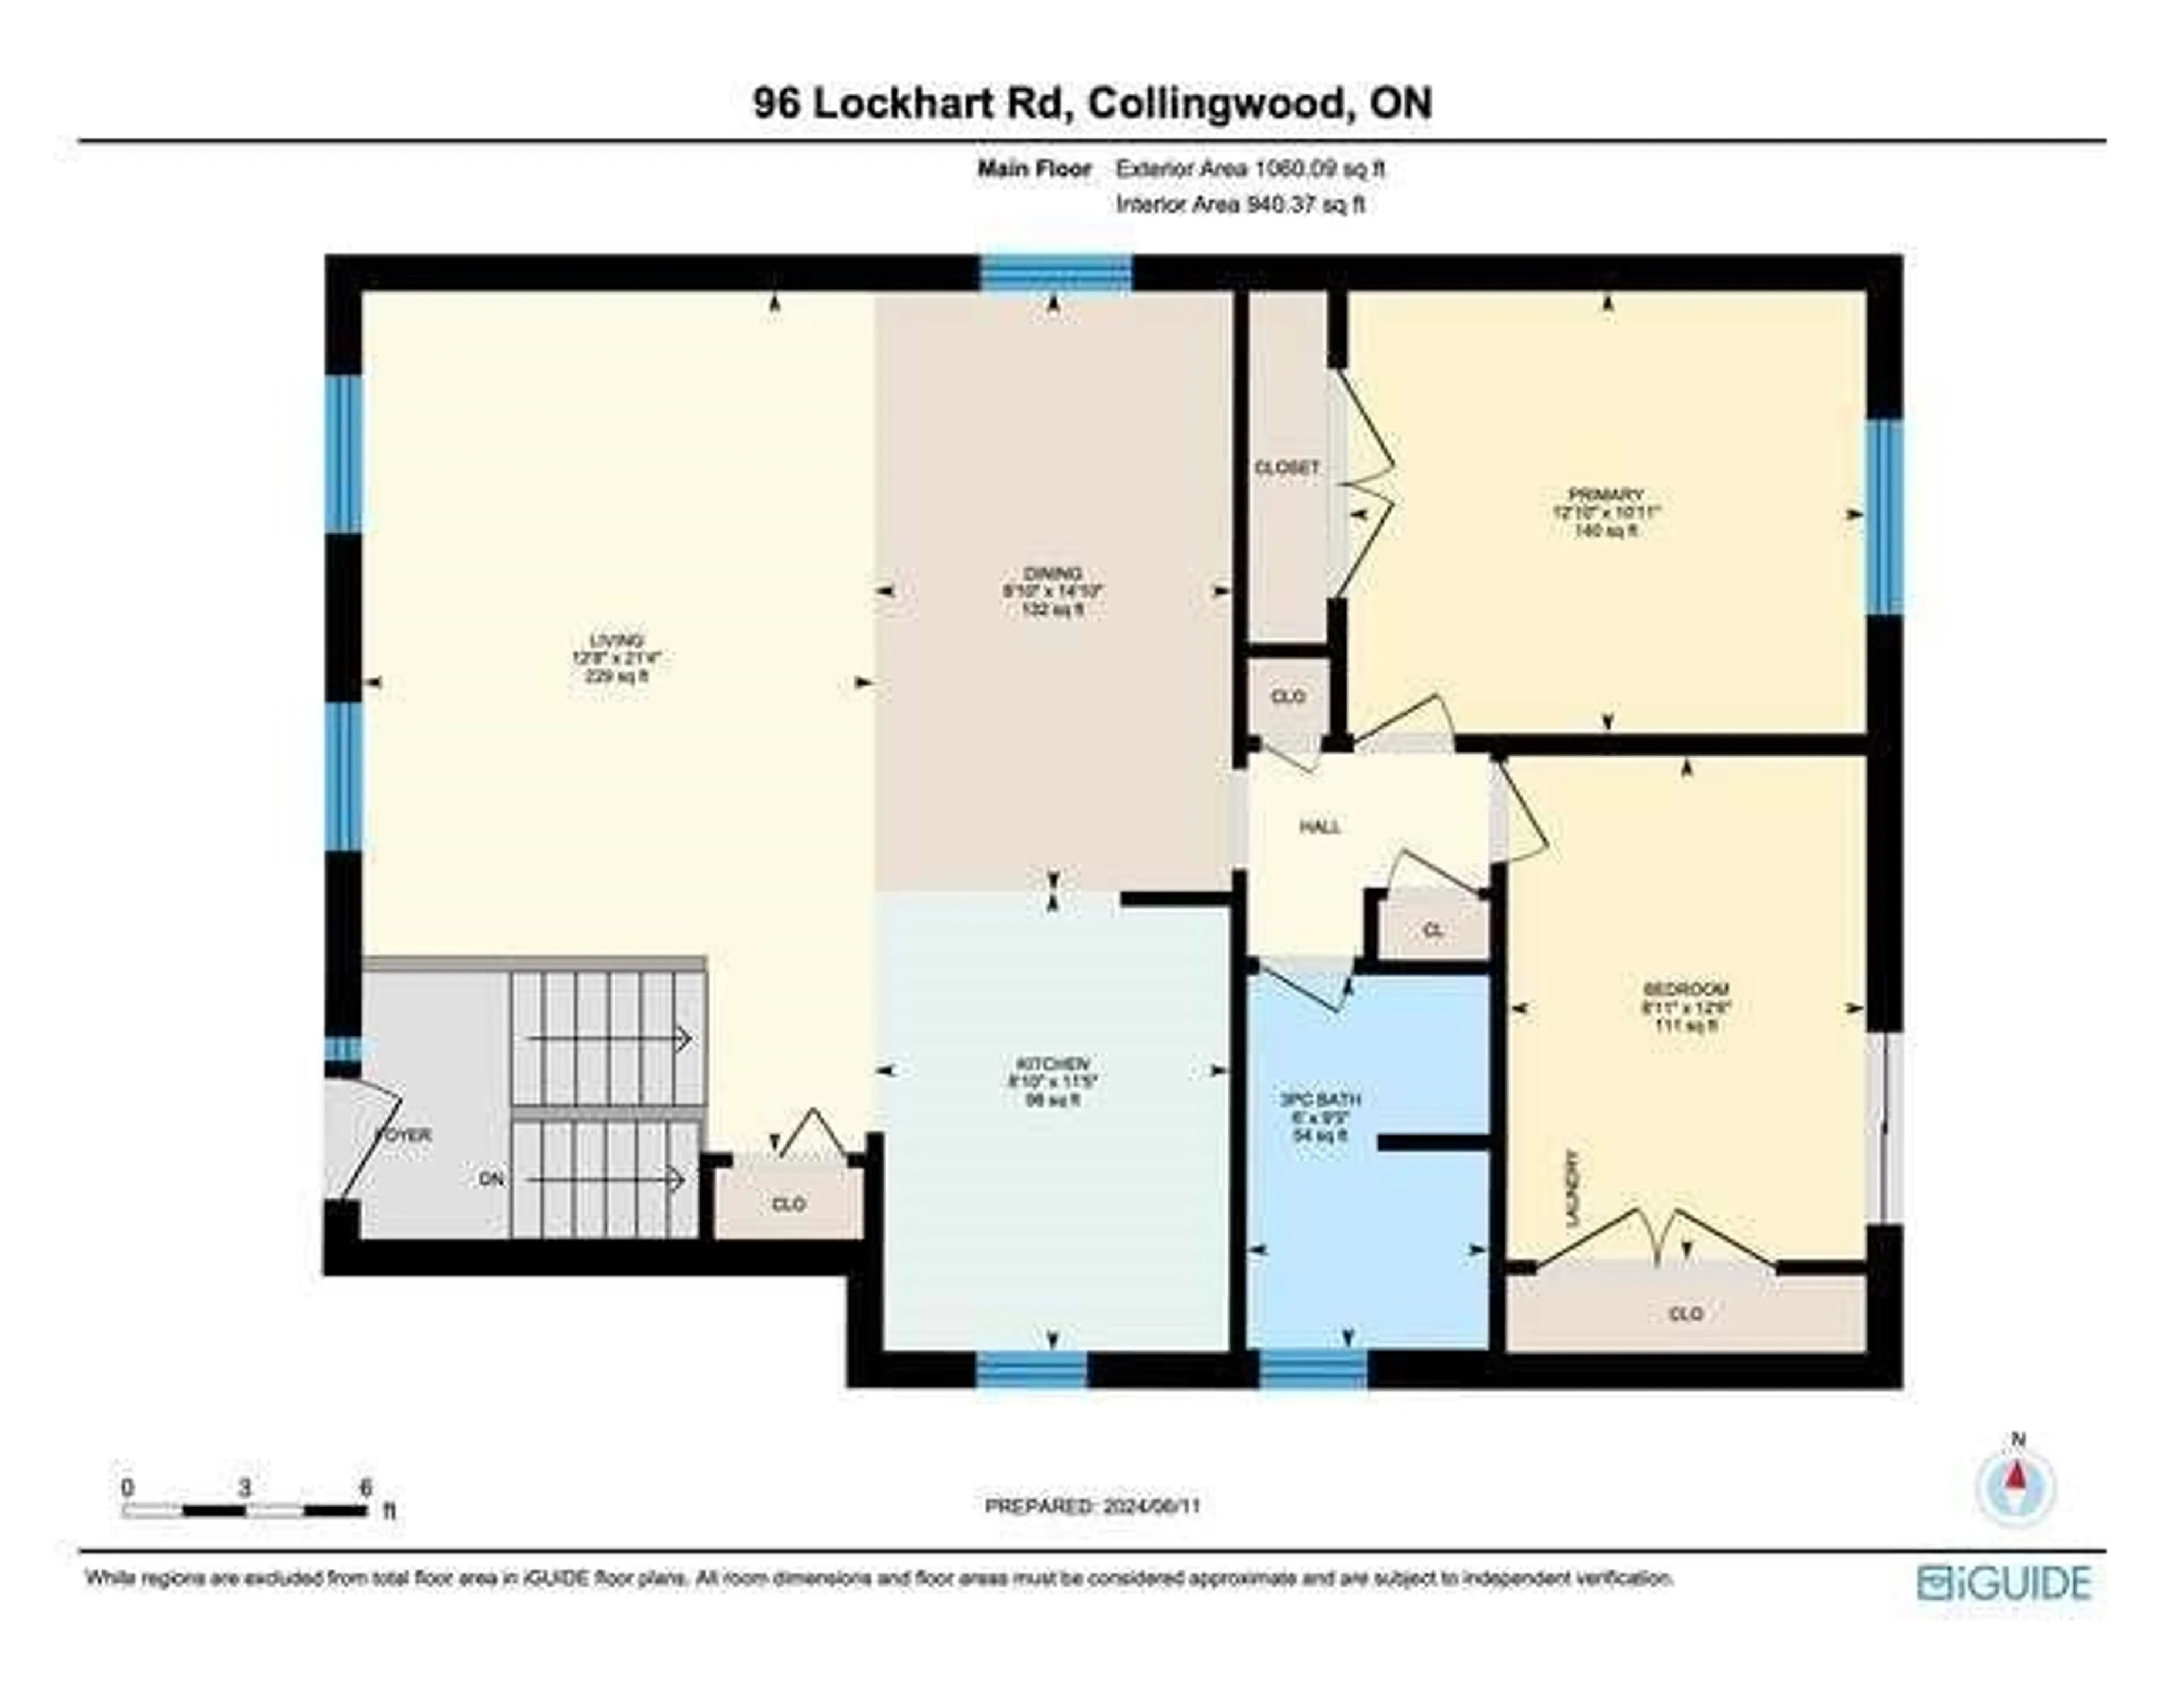 Floor plan for 96 Lockhart Rd, Collingwood Ontario L9Y 4L6